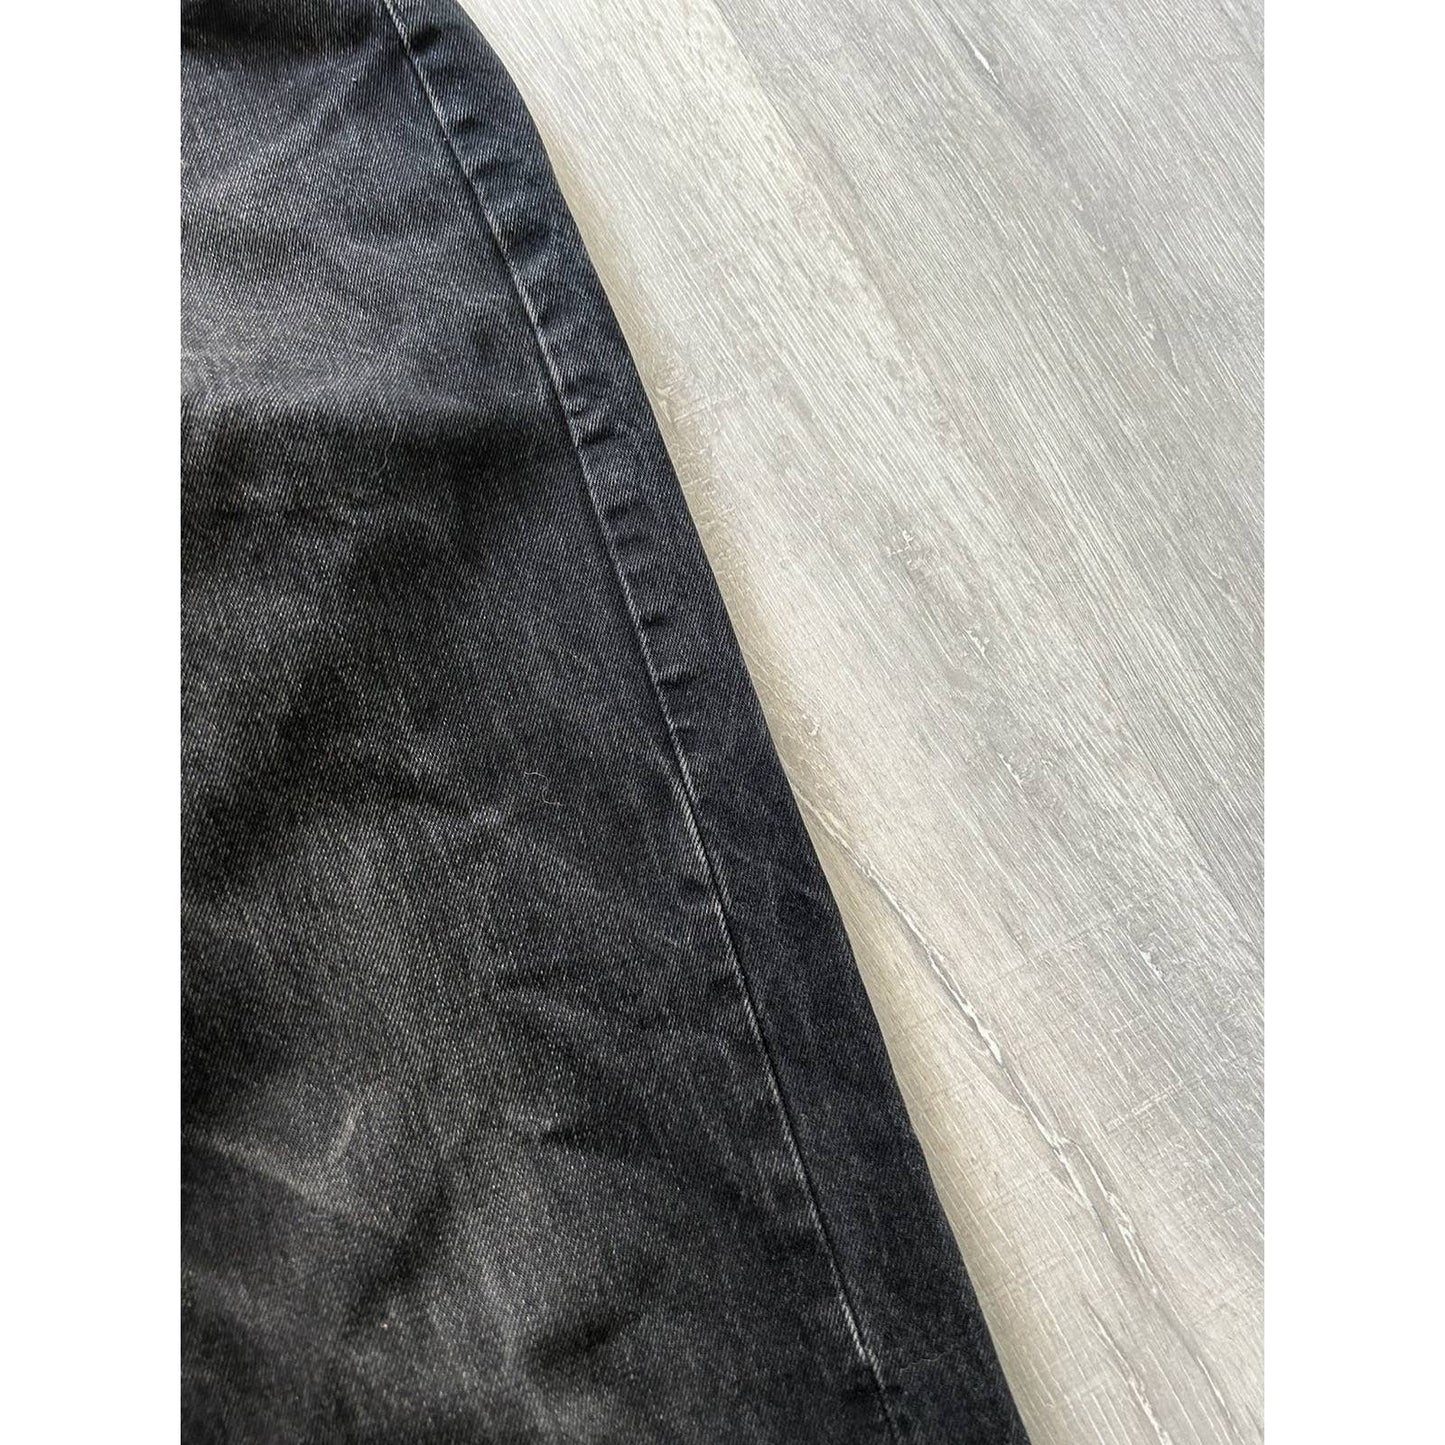 90s Levi’s 501 vintage black jeans made in USA denim